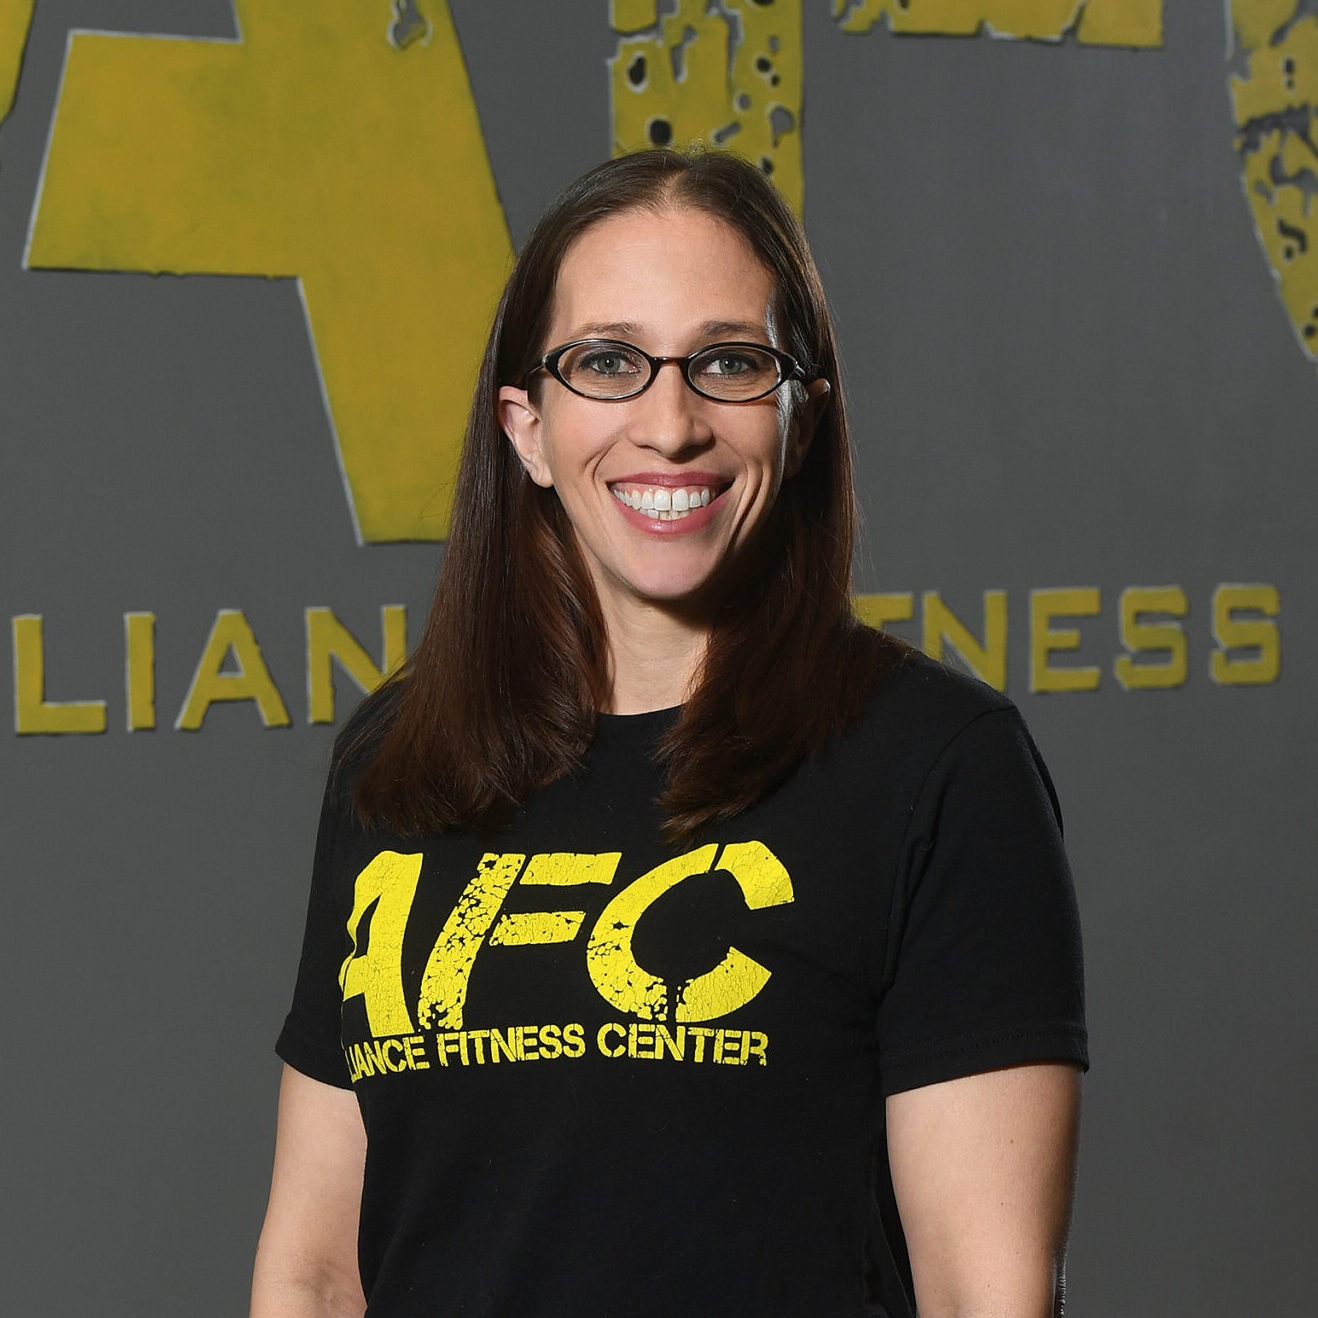 Sarah Showalter Alliance Fitness Center